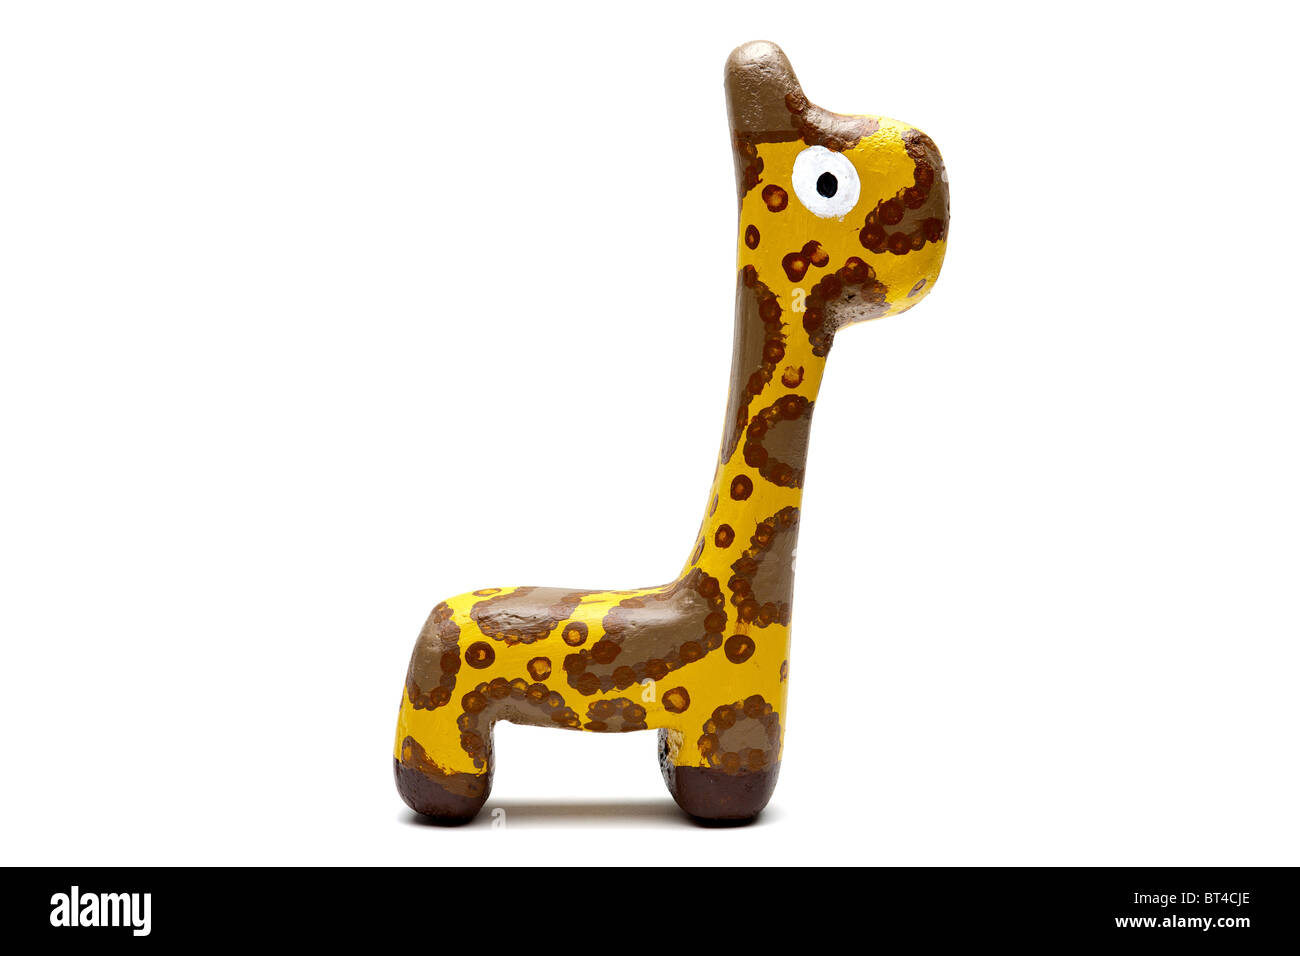 Geschnitzte Holz Giraffe. Stockfoto